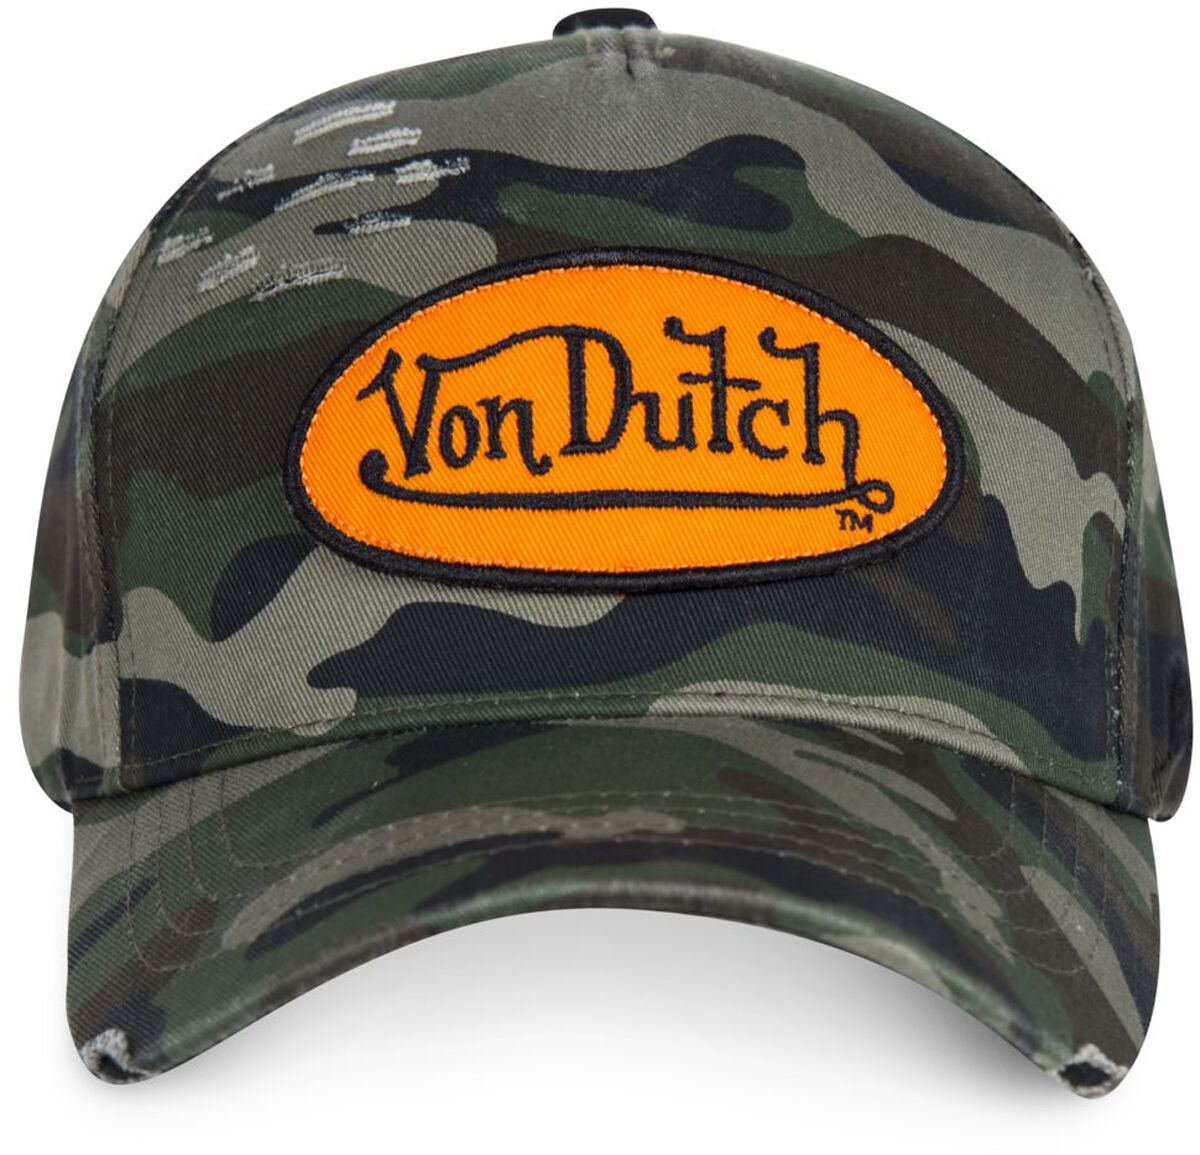 Image of Cappello di Von Dutch - VON DUTCH BASEBALL CAP - Unisex - mimetico